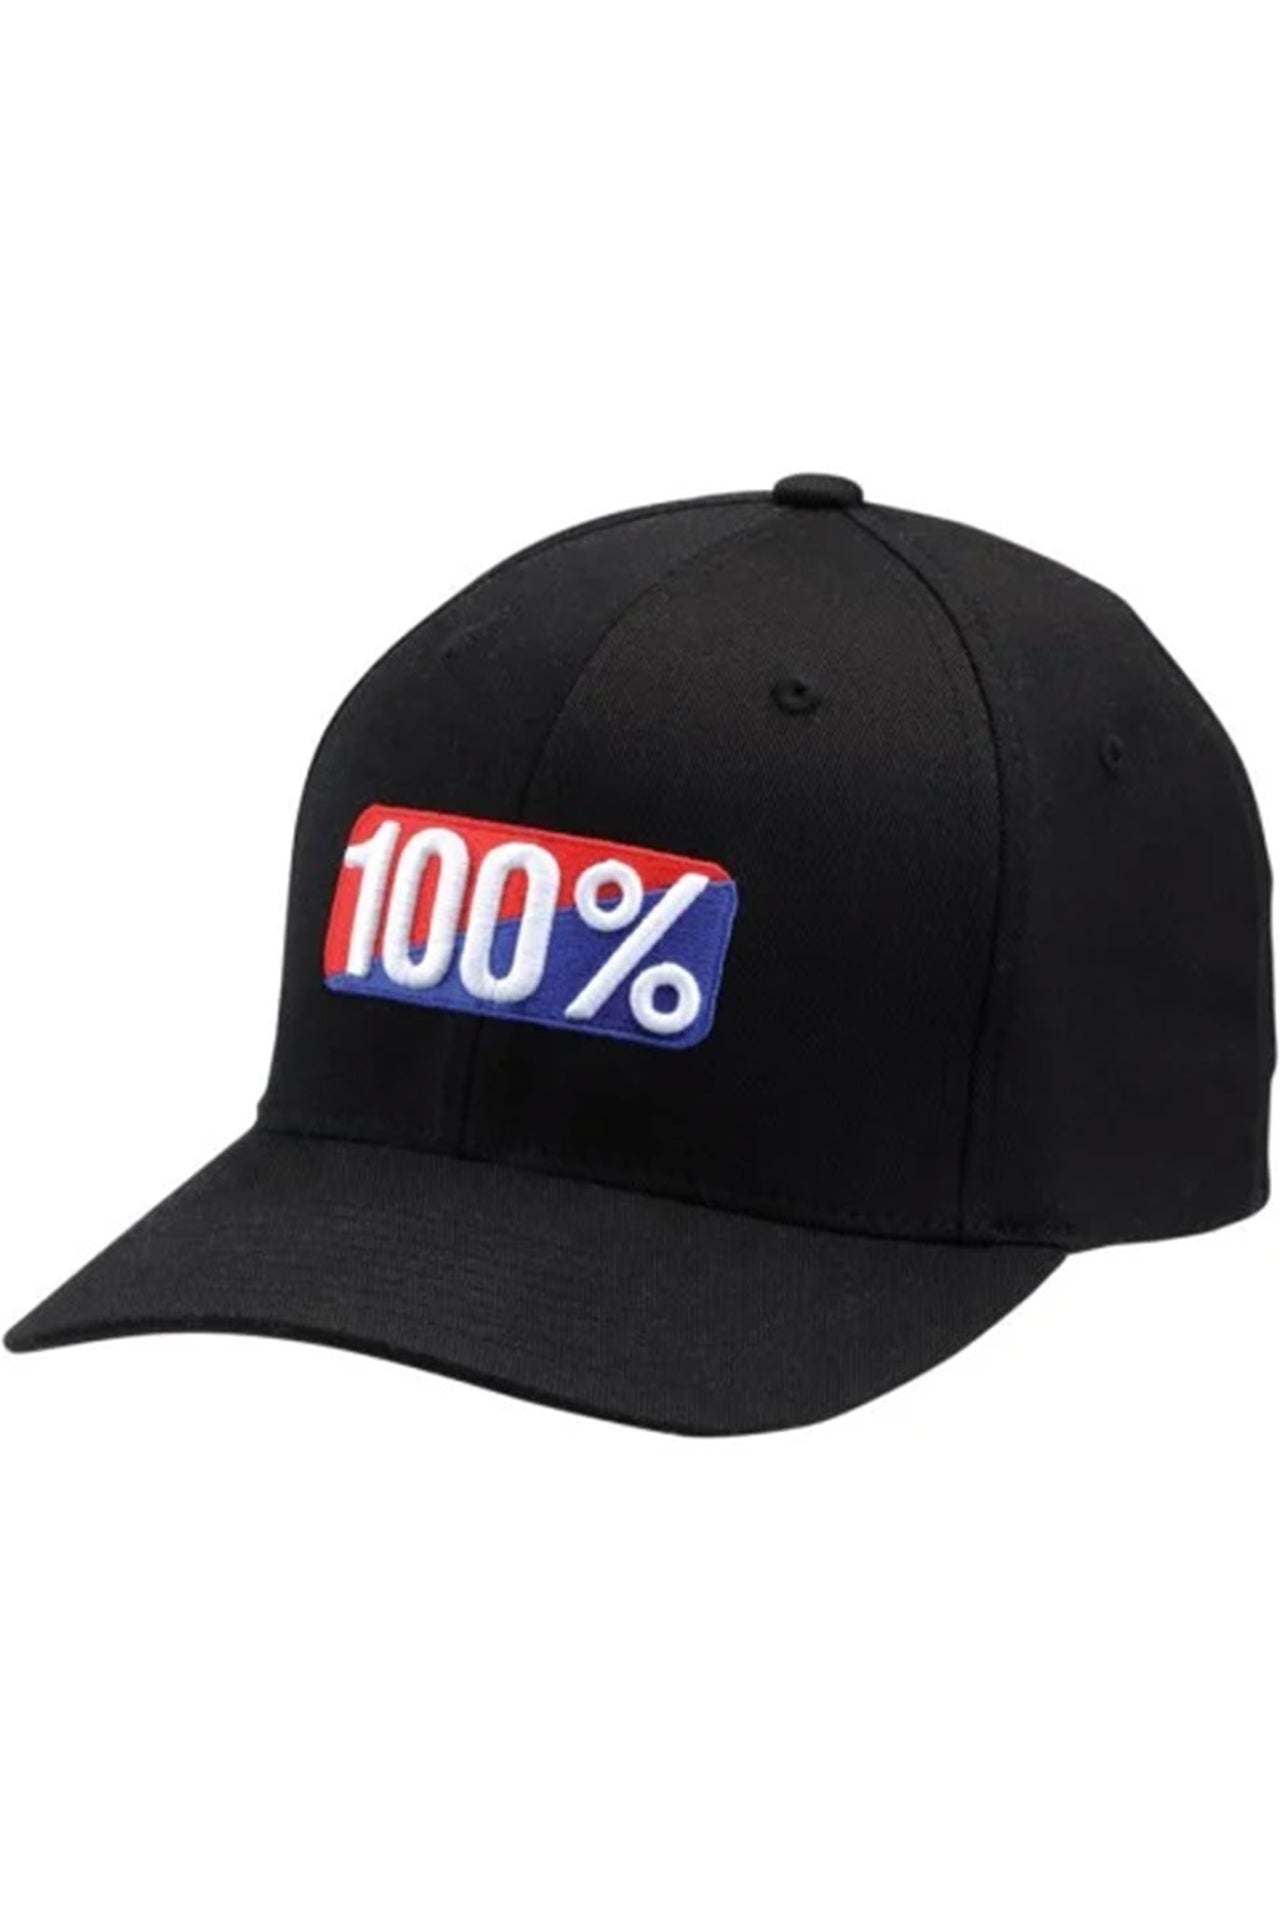 Gorra 100% Classic Flexfit Cap Black